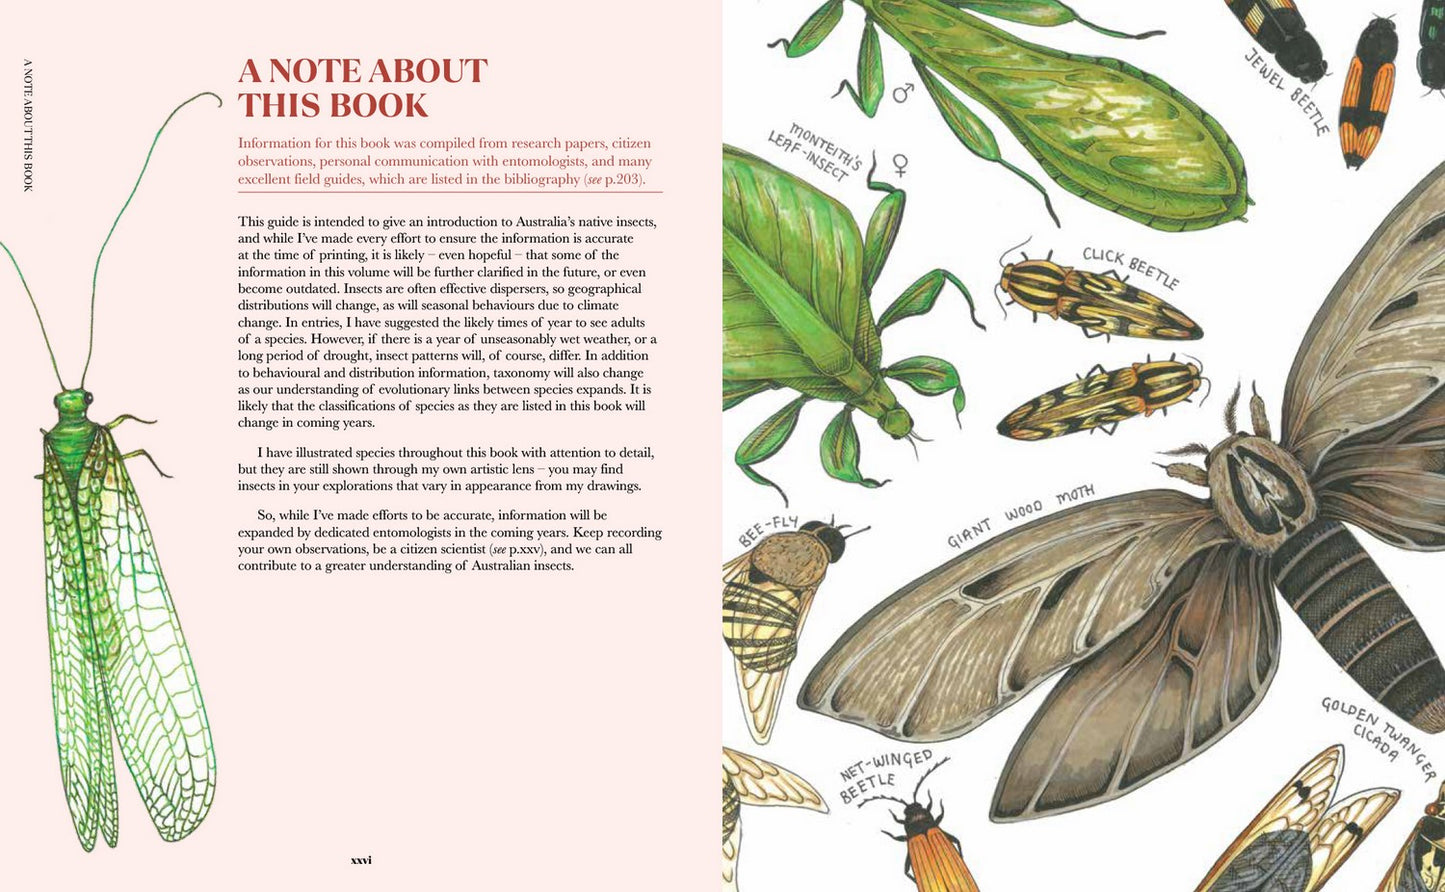 100 Australian Butterflies, Bees, Beetles & Bugs